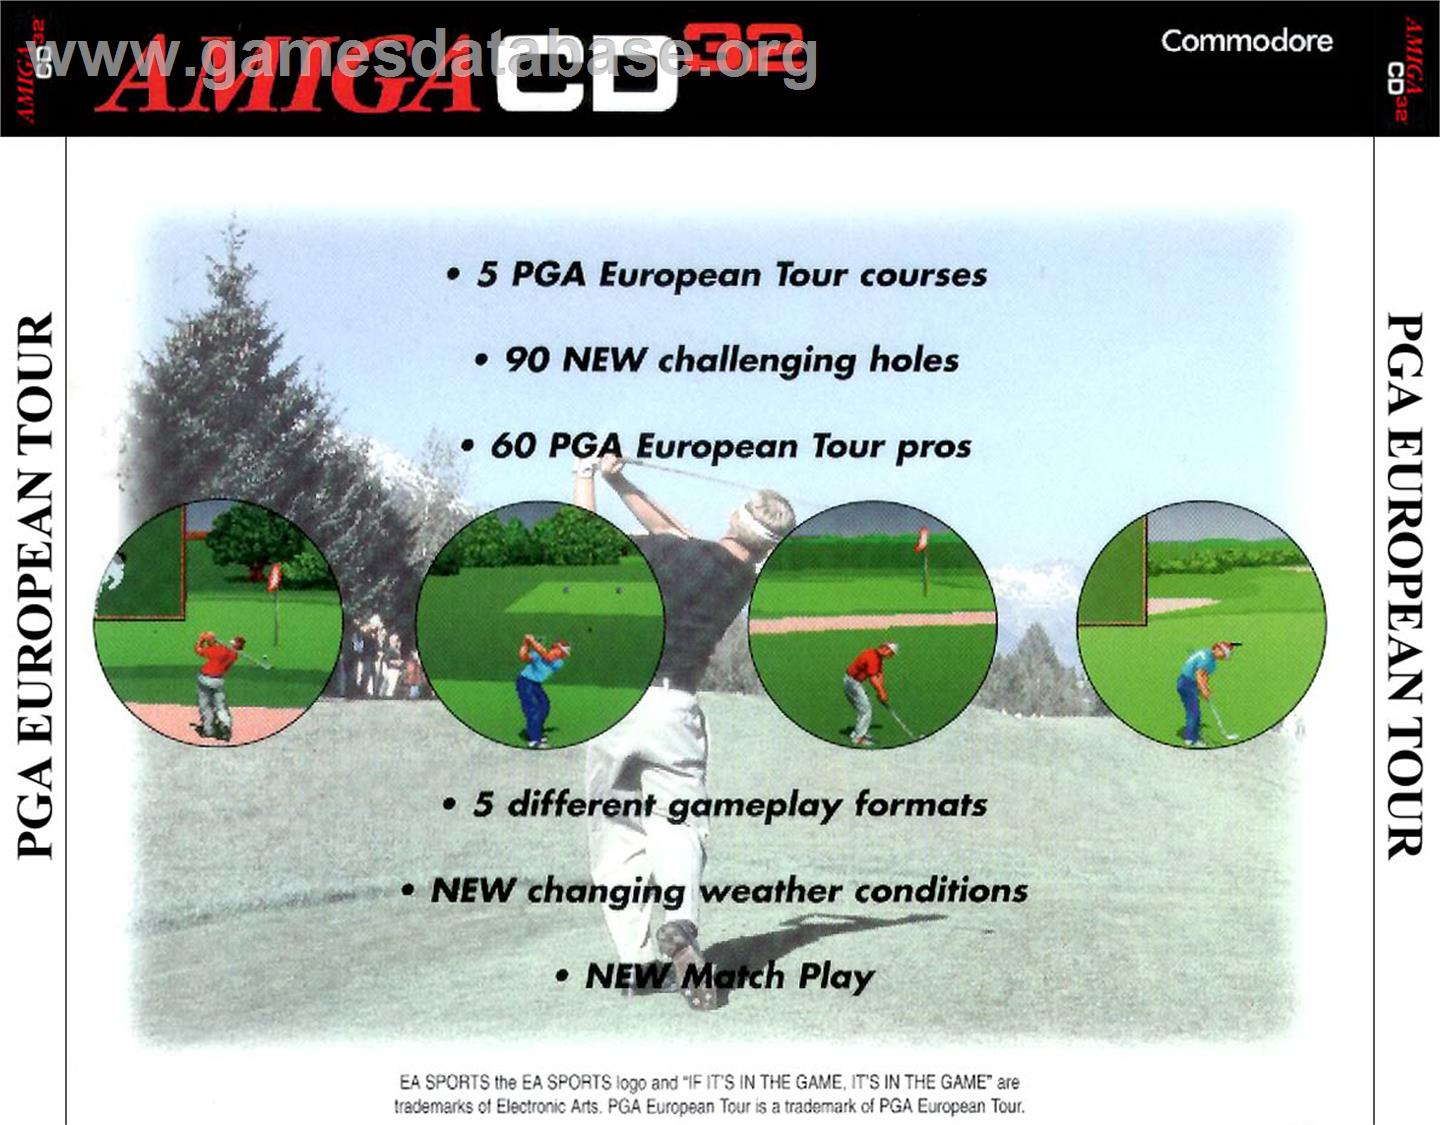 PGA European Tour - Commodore Amiga CD32 - Artwork - Box Back